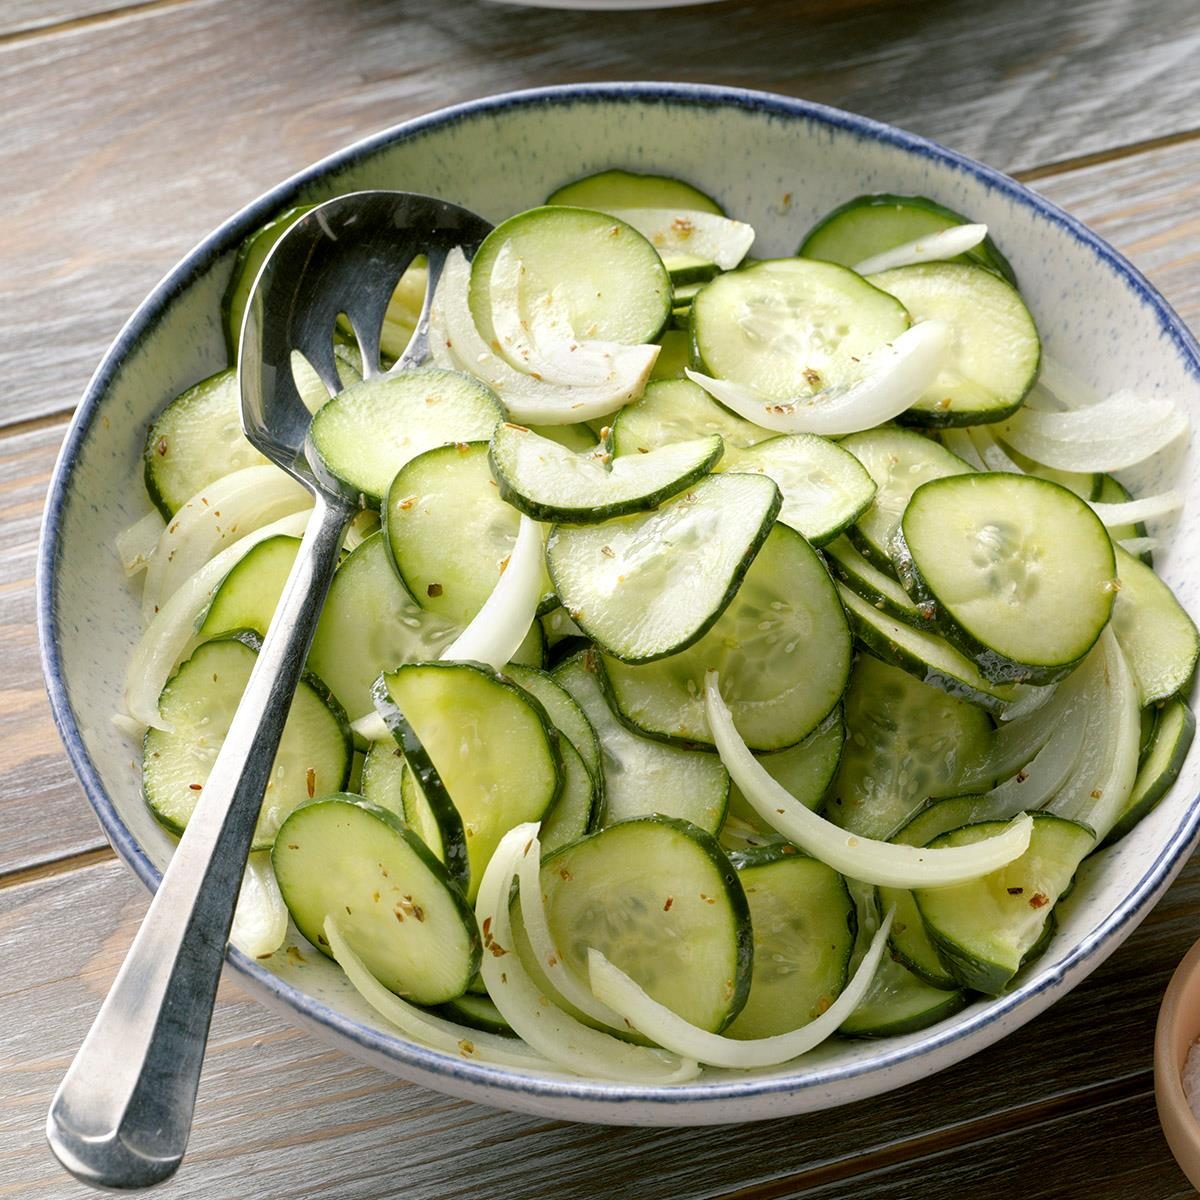 Marinated Cucumbers Recipe: How to Make It